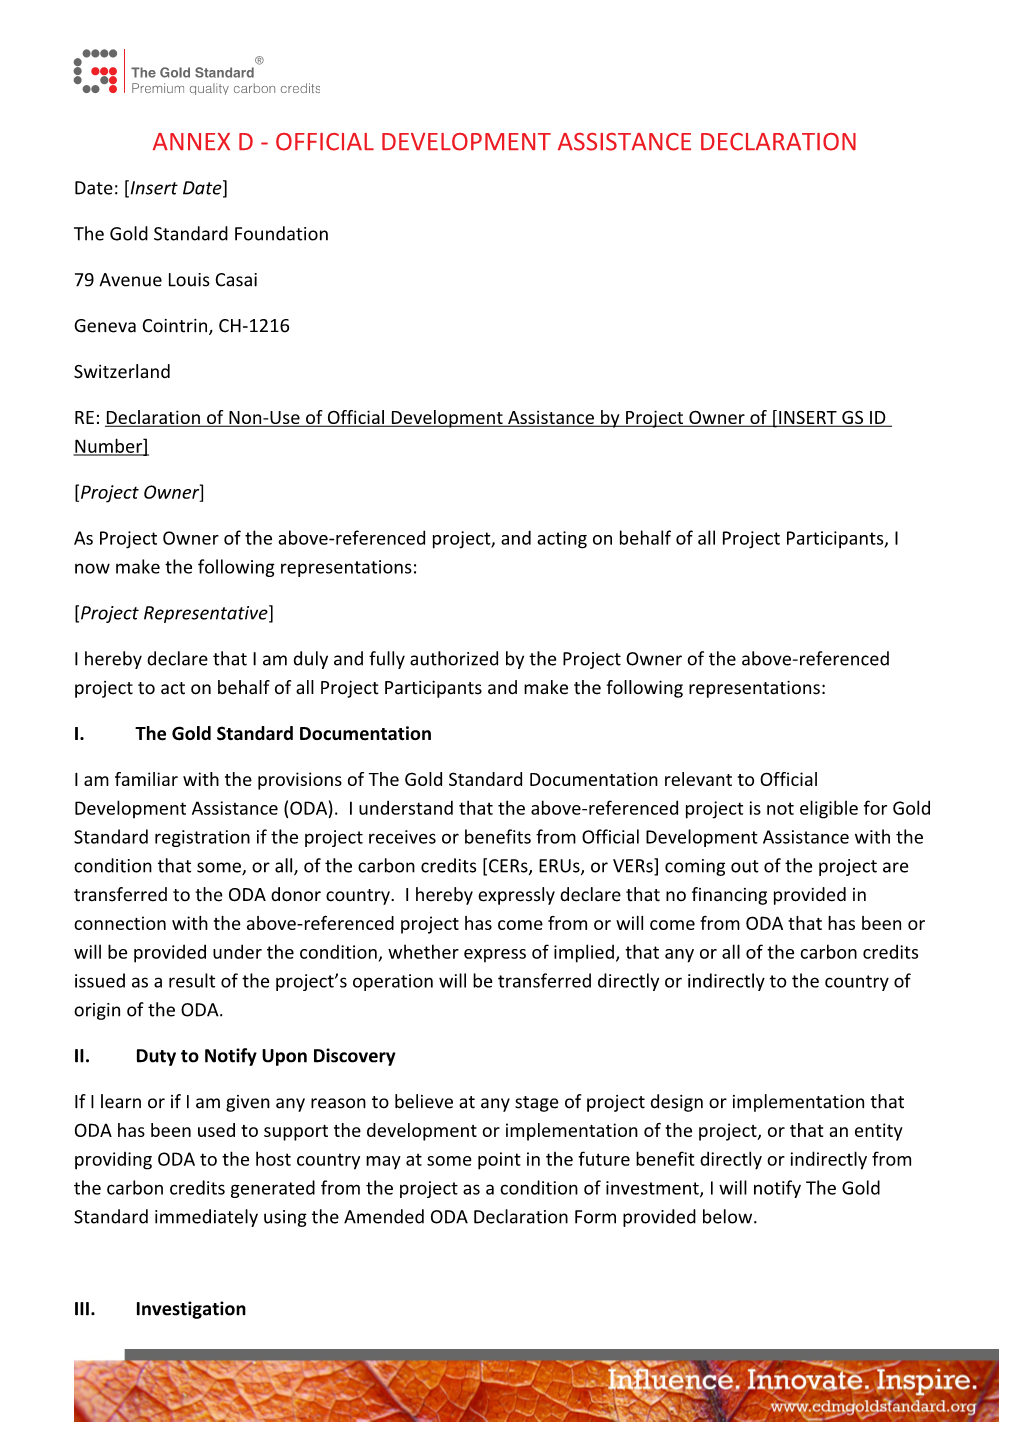 Annex D - Official Development Assistance Declaration